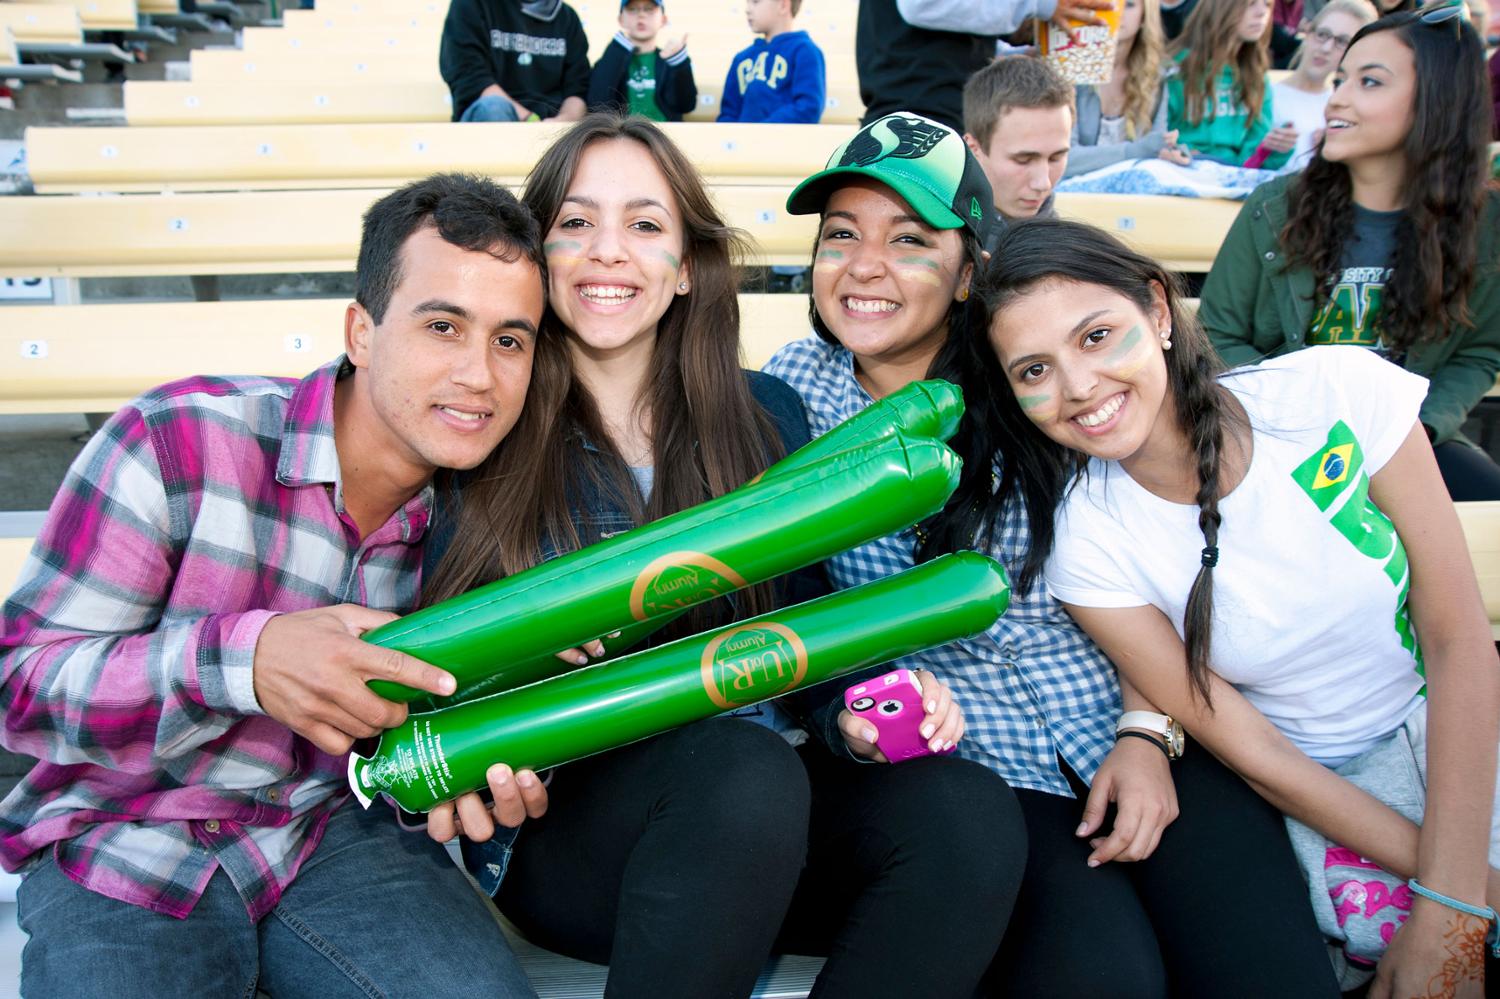 Students at a Rams Football game